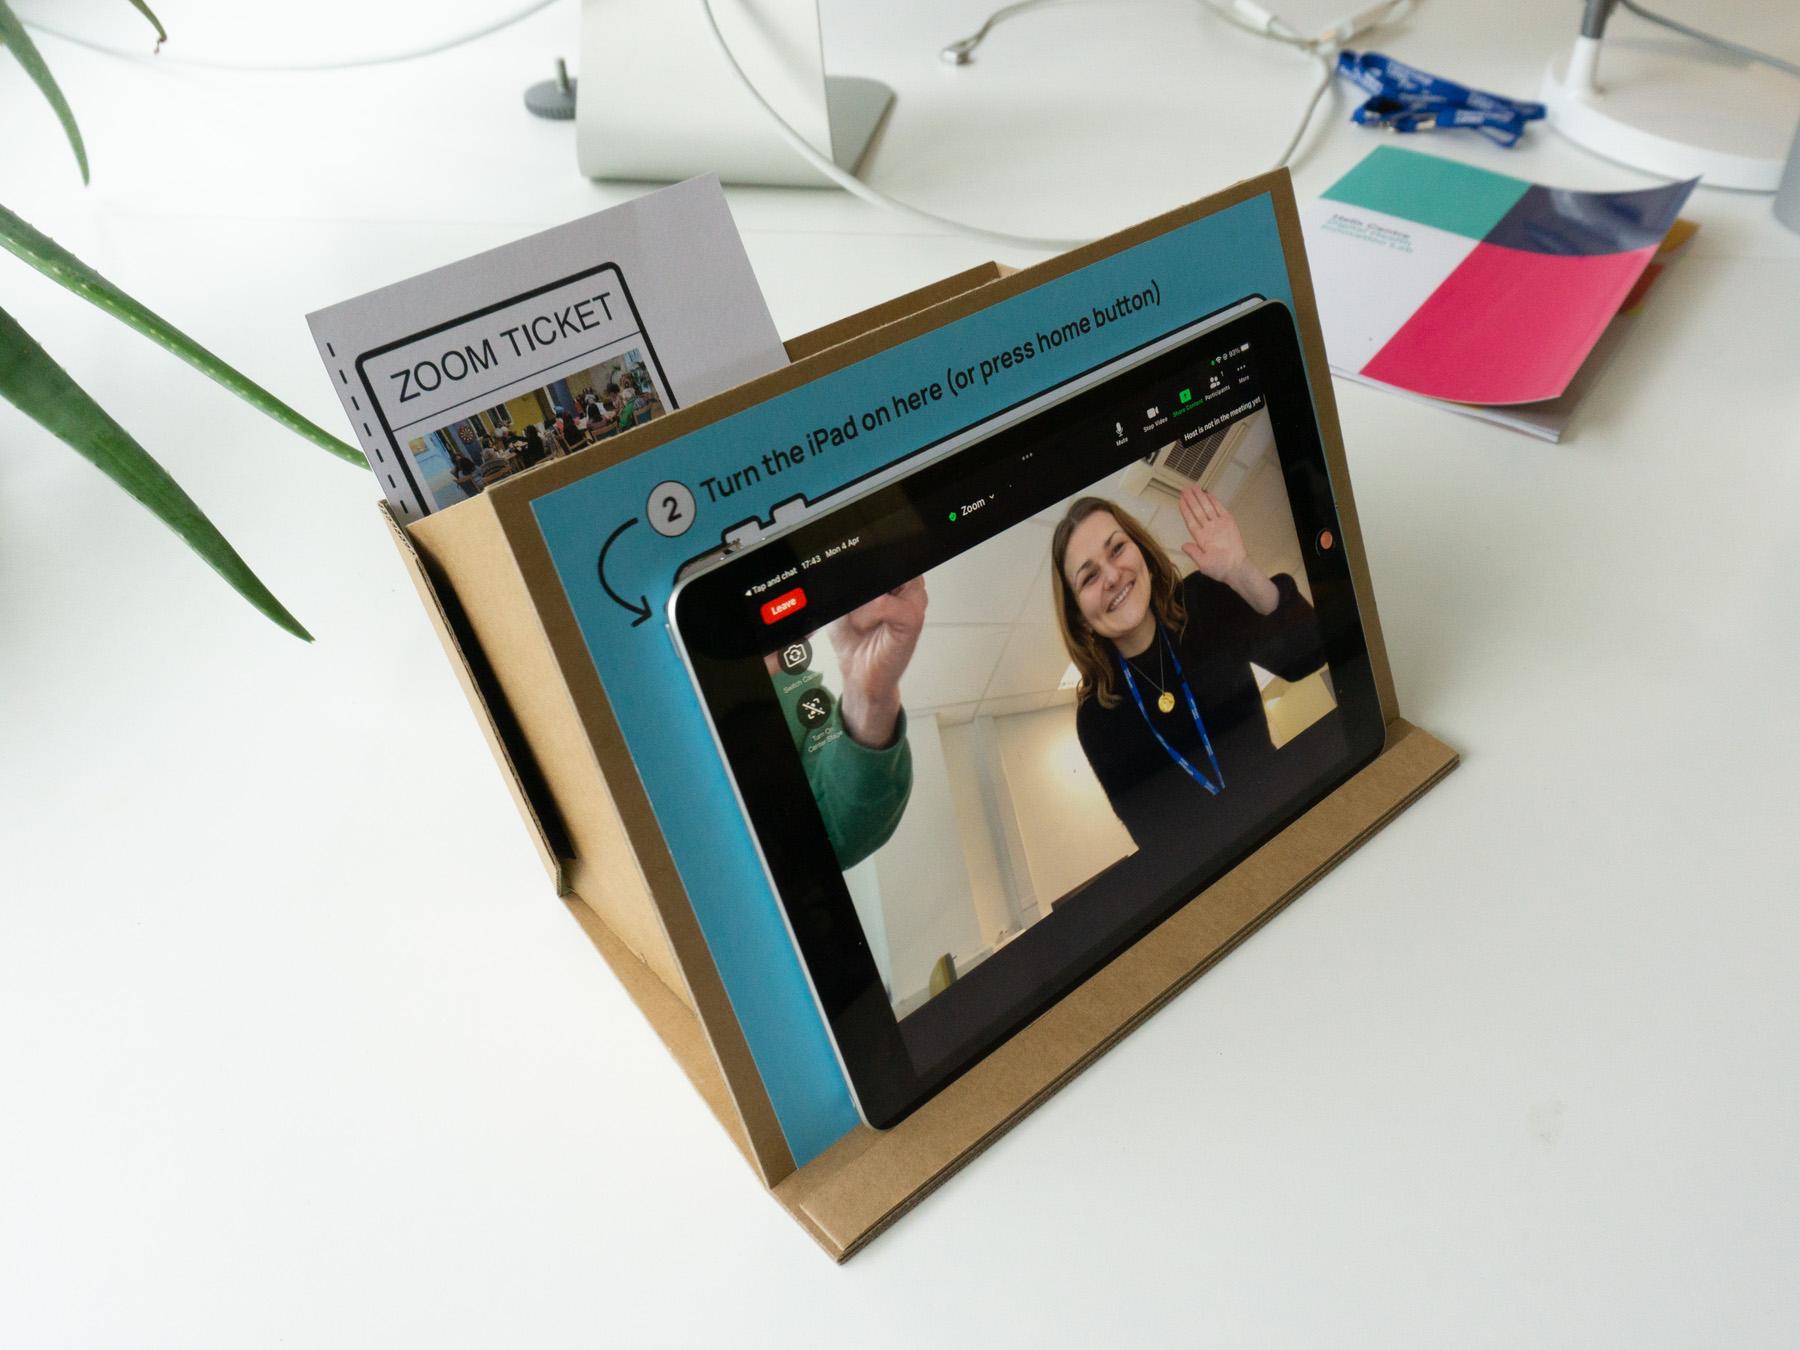 iPad on a cardboard stand